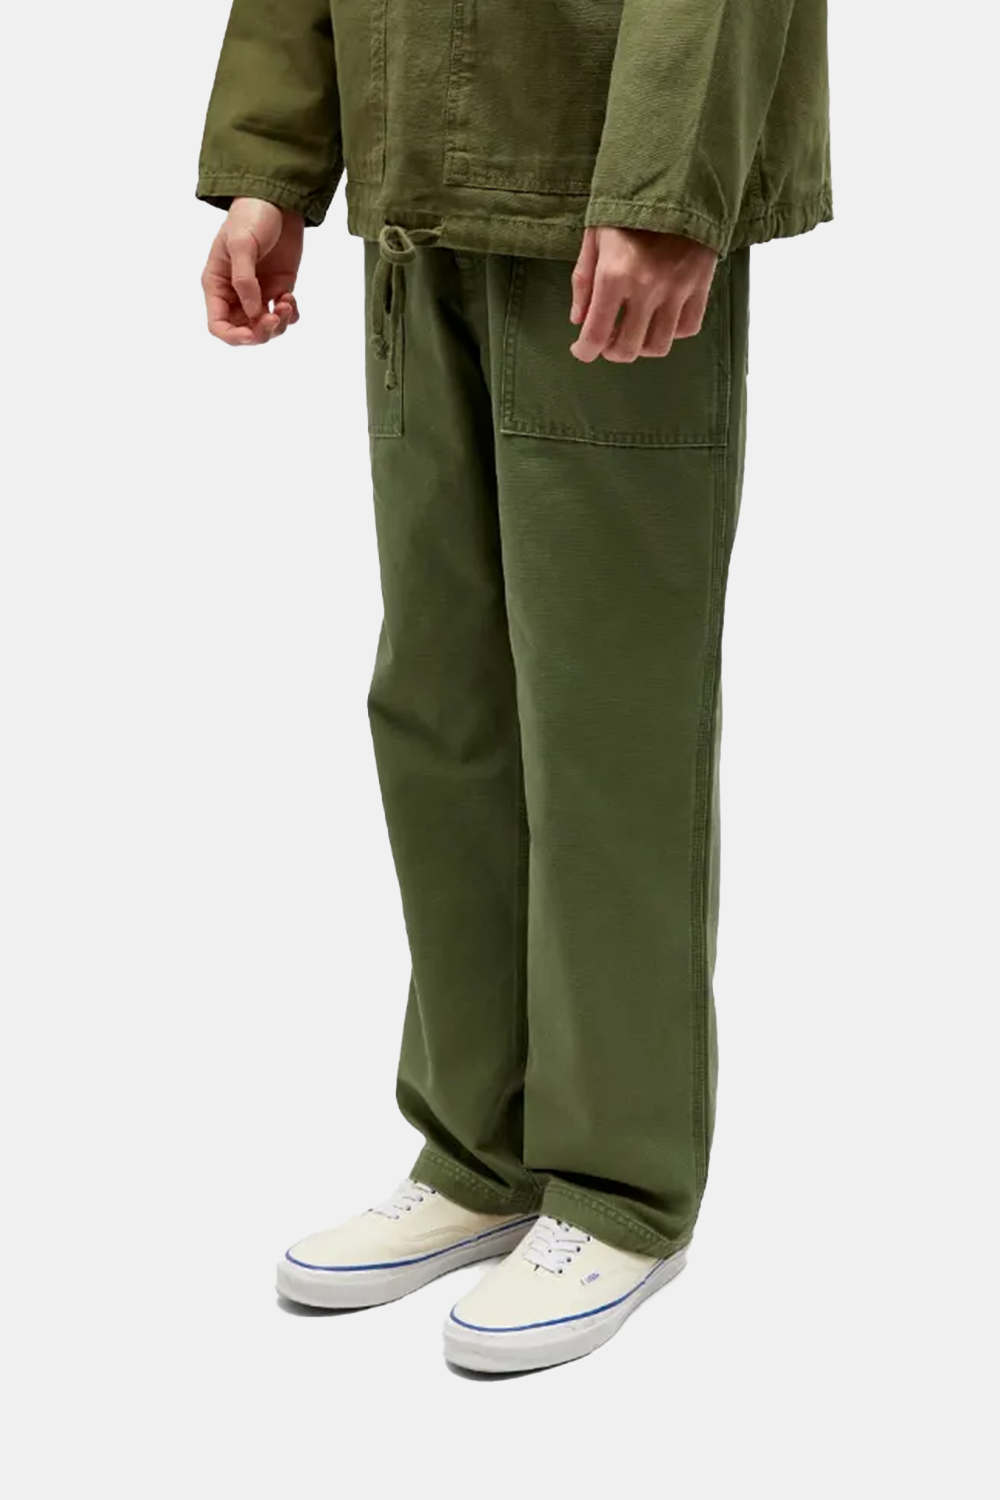 Frizmworks Jungle Cloth Fatigue Pants (Olive)